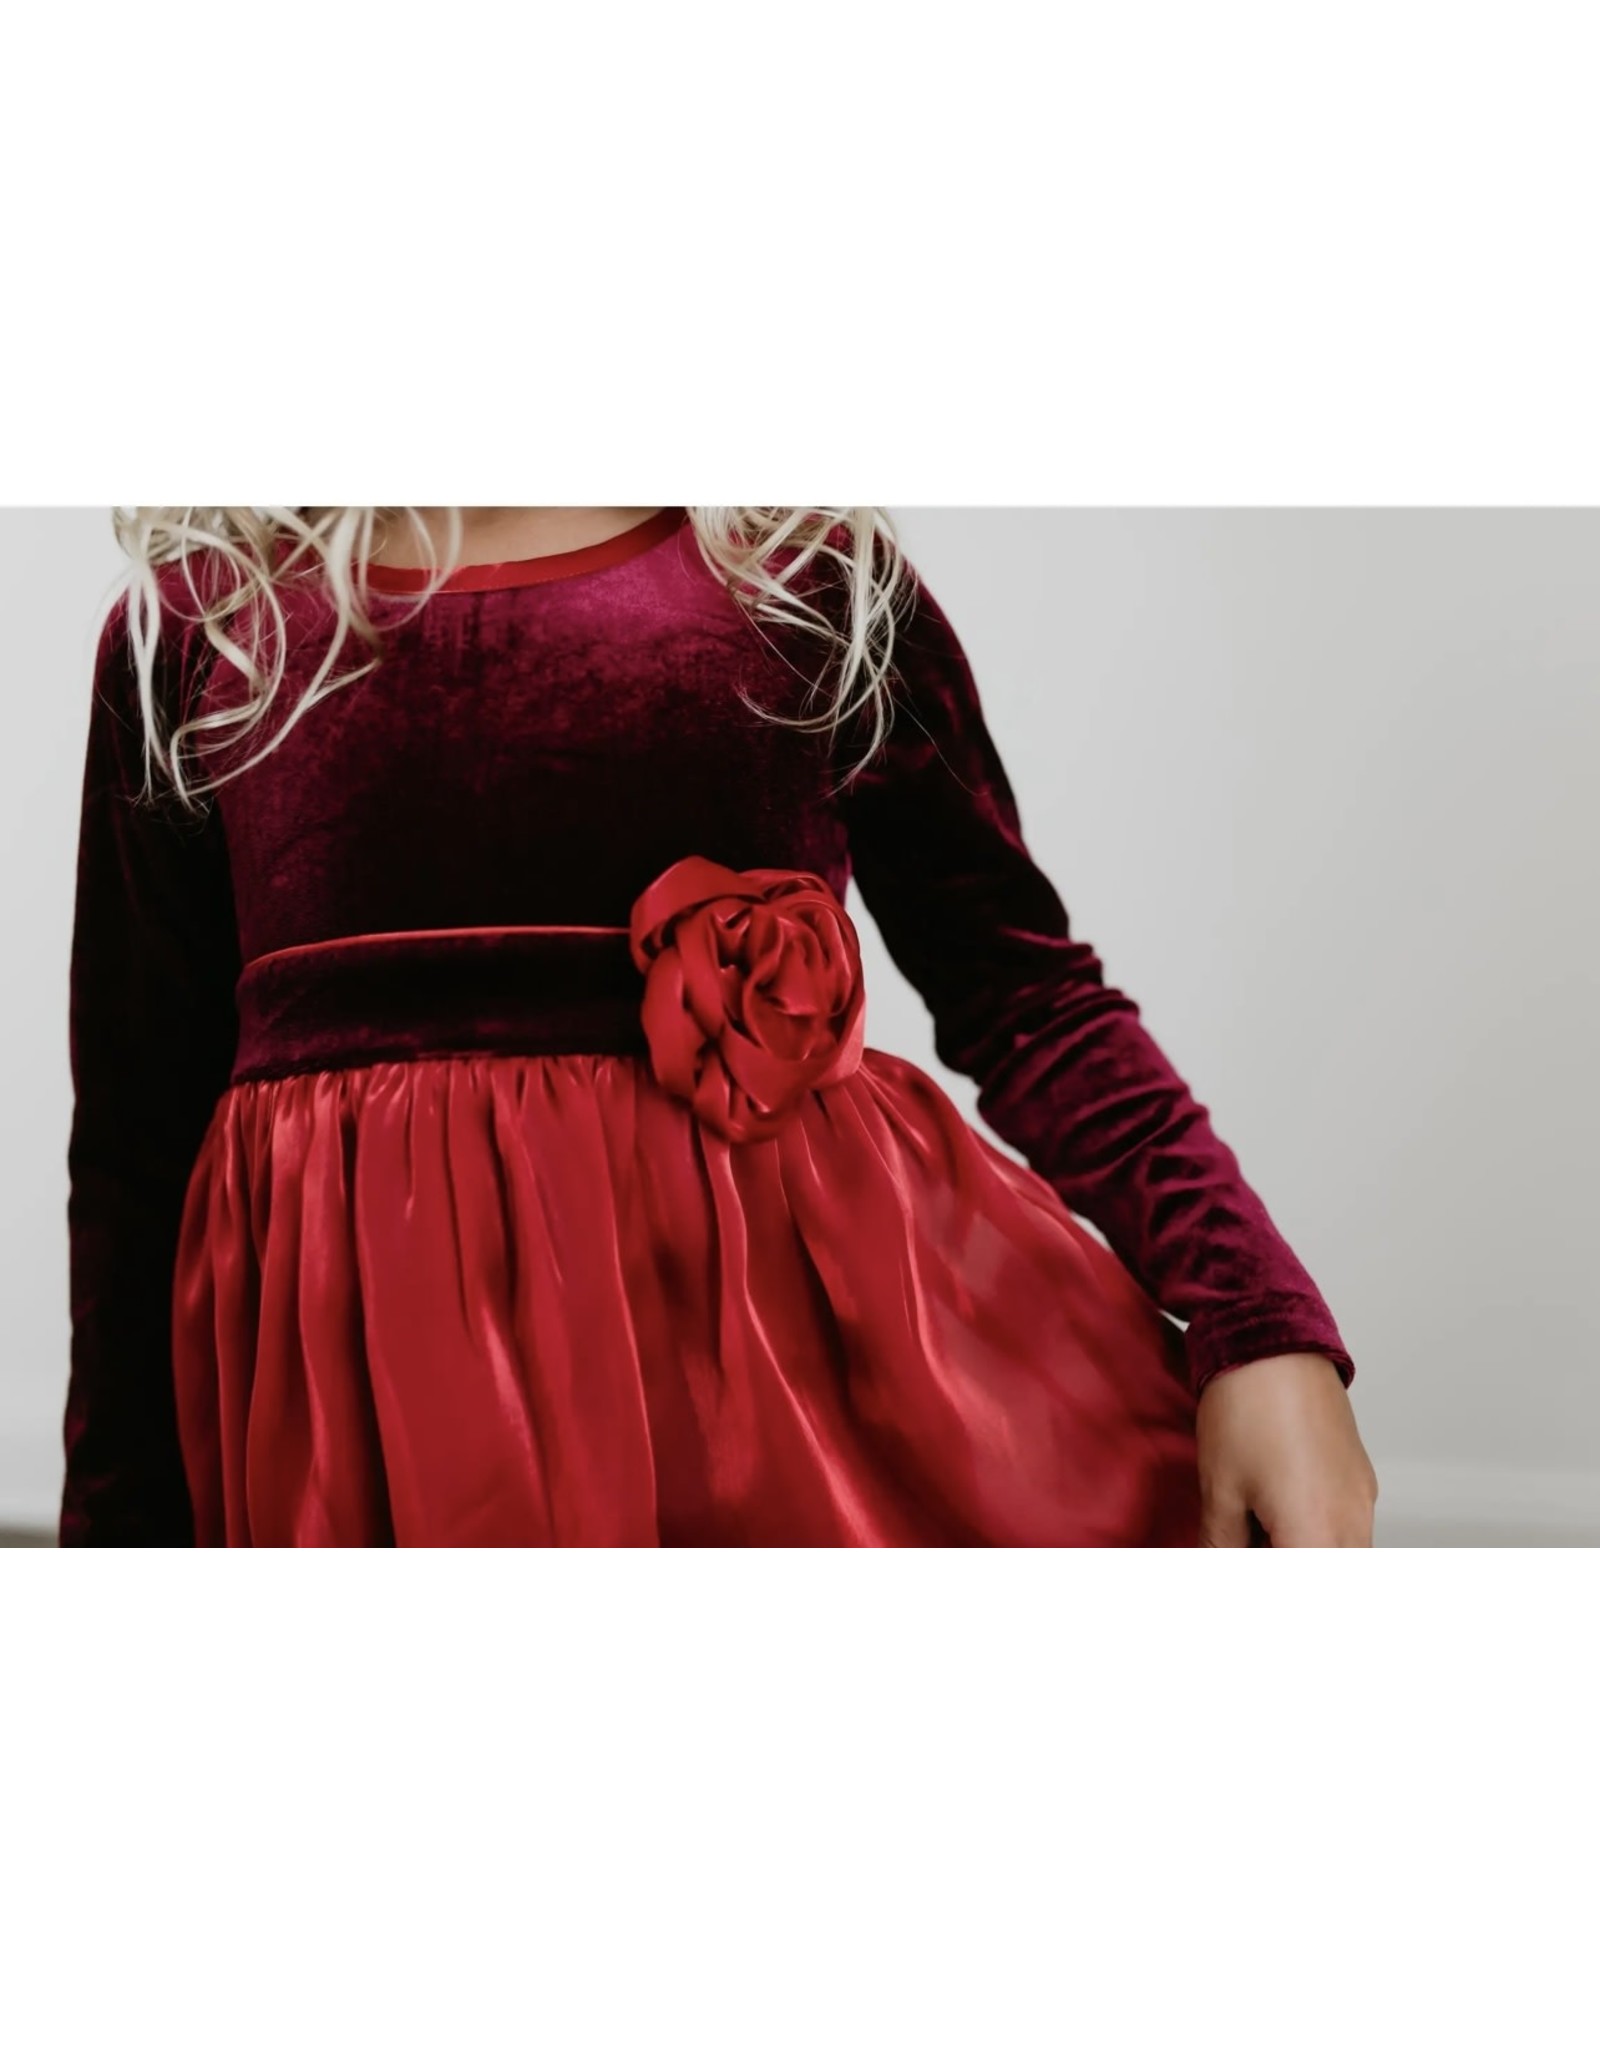 Oopsie Daisy Oopsie Daisy- Holiday Red Velvet Dress